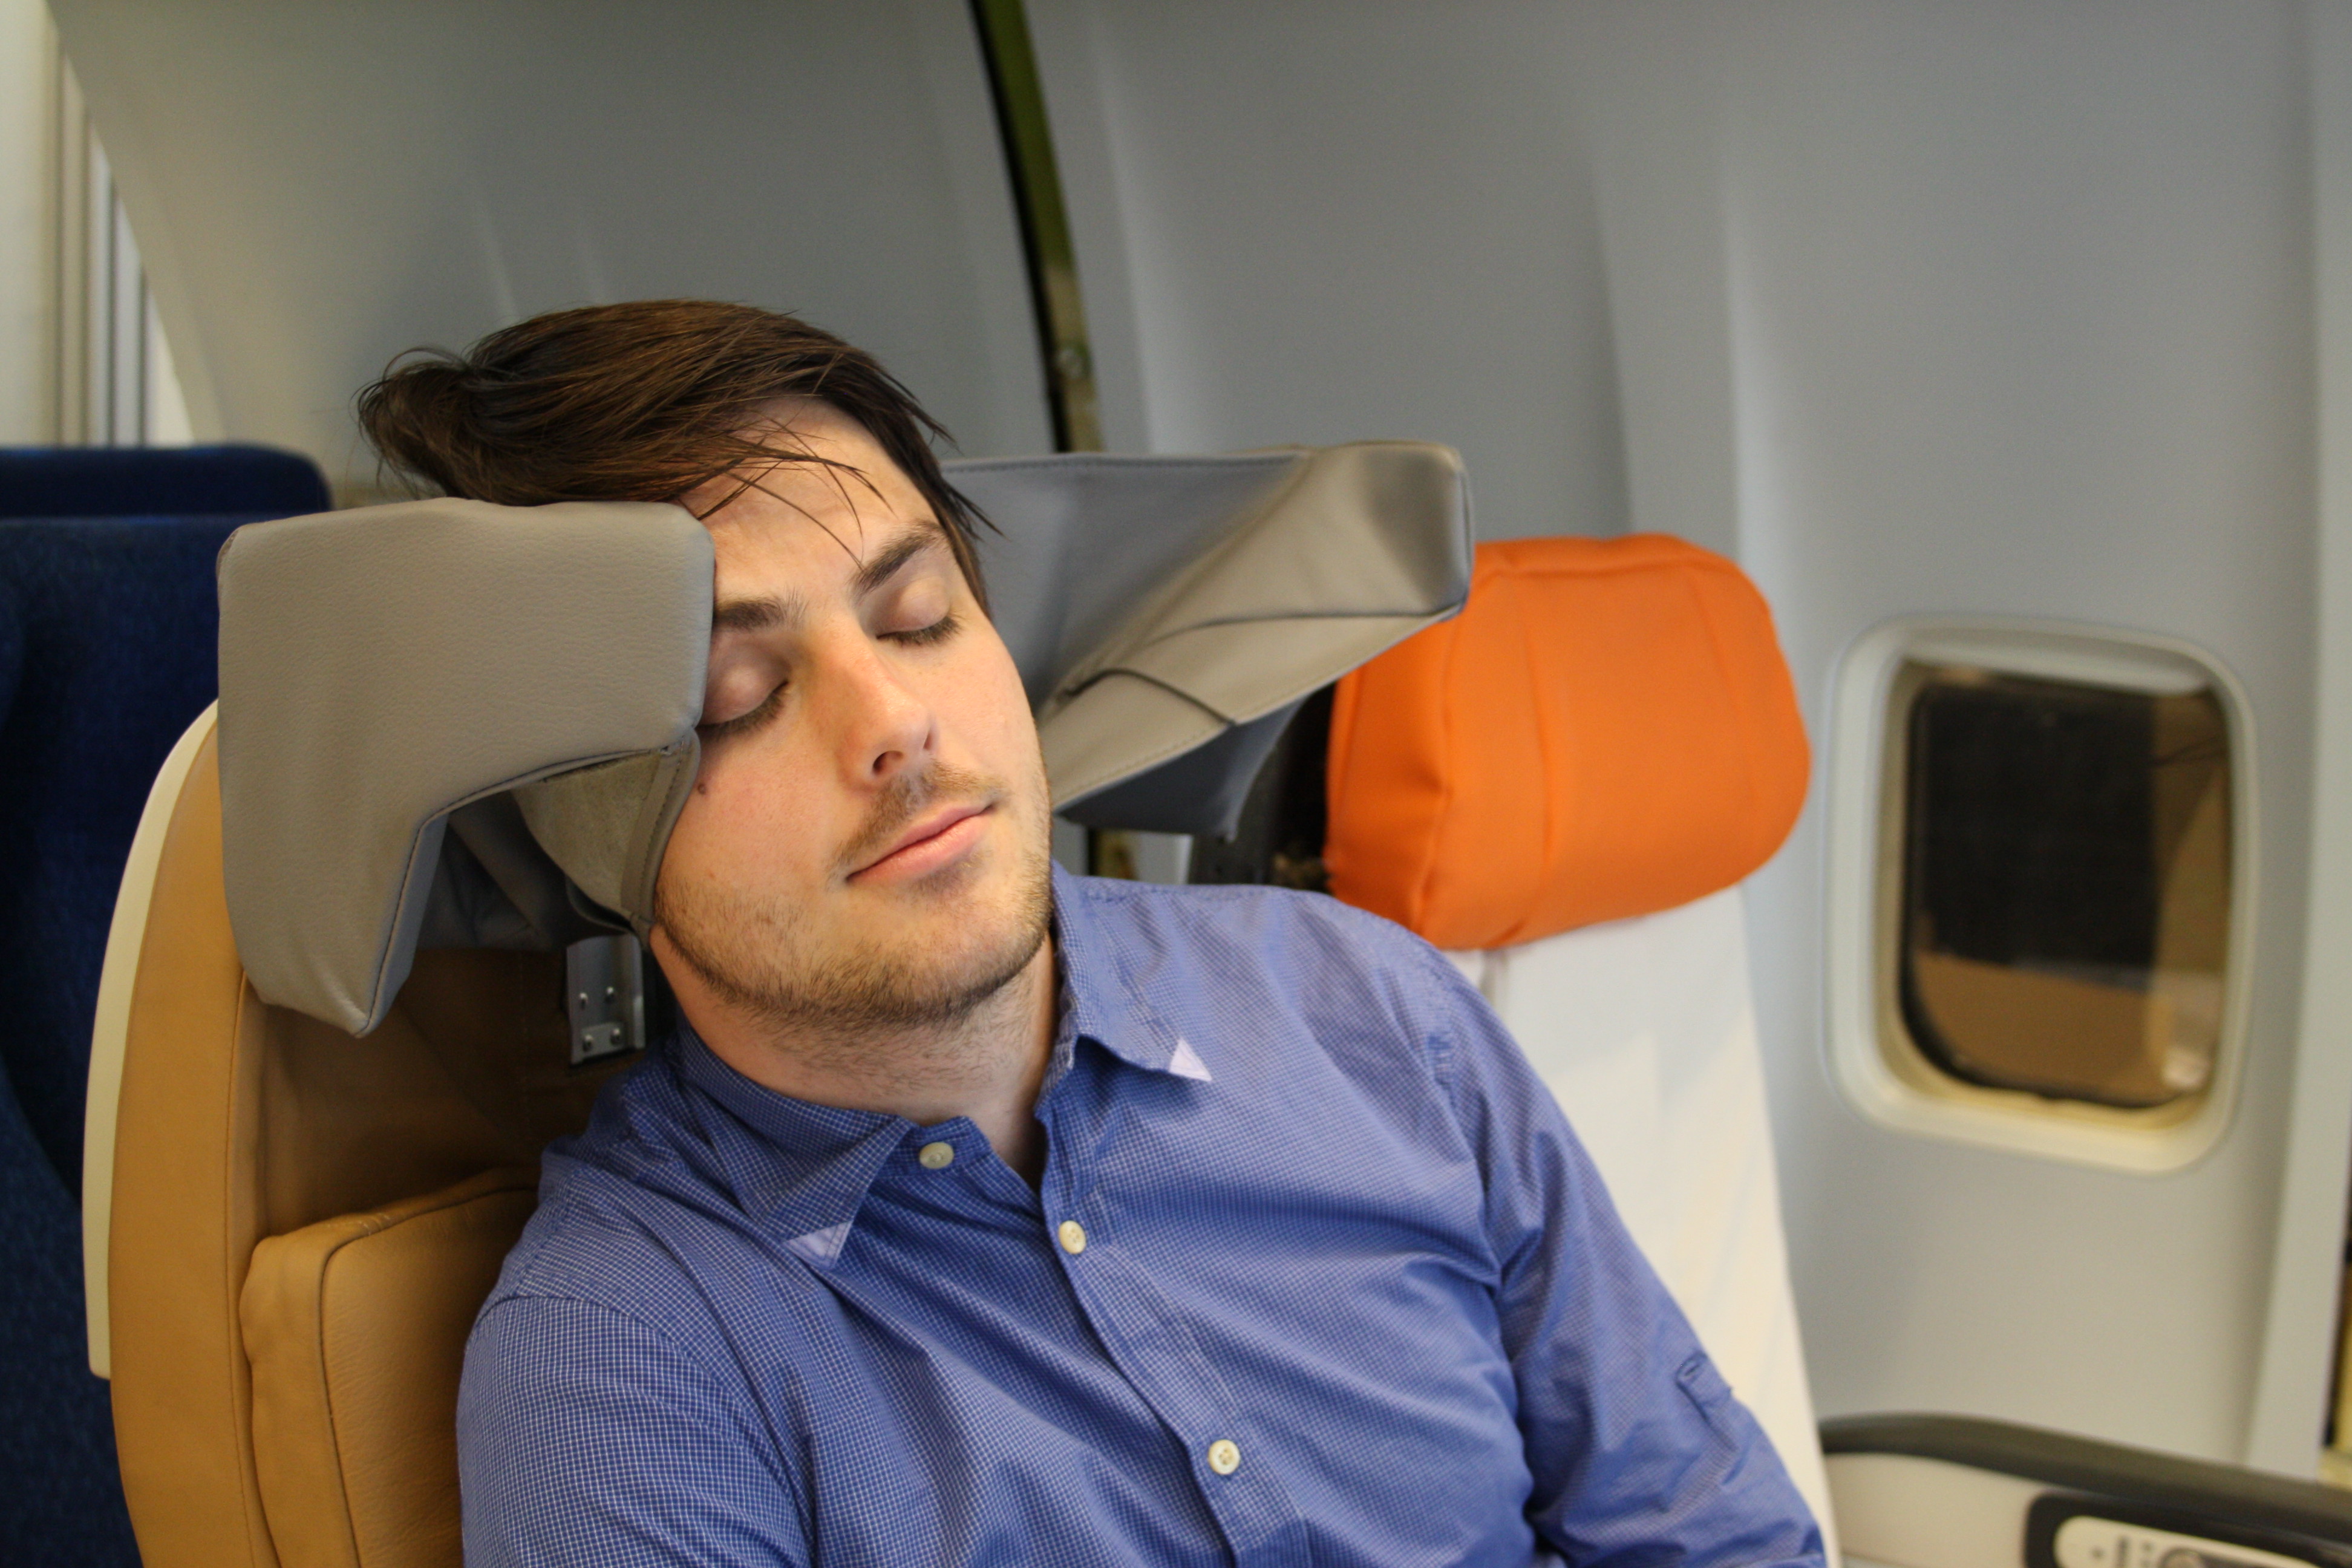 Включи станцию для сна. Приспособления для сна в самолете. Сон в самолете. Подушка для сна в самолете. Спать в самолете.